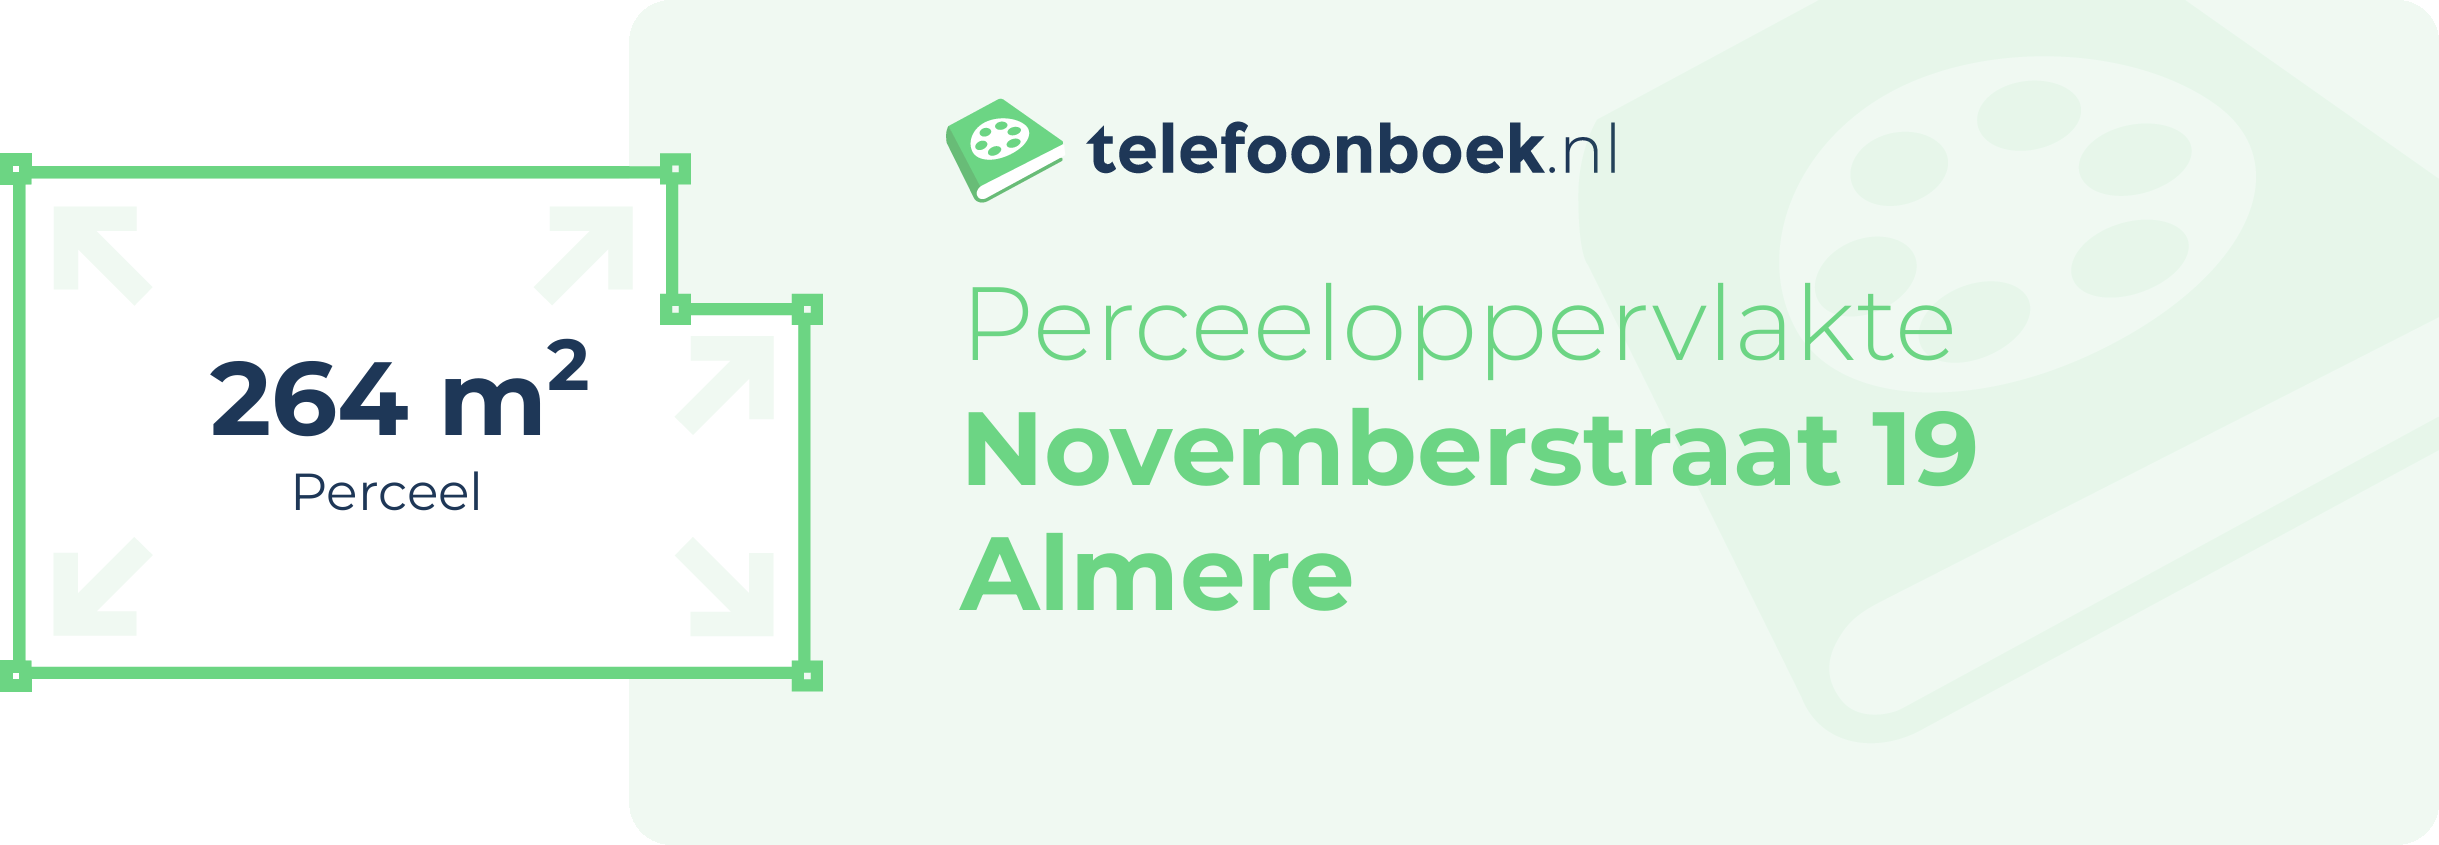 Perceeloppervlakte Novemberstraat 19 Almere